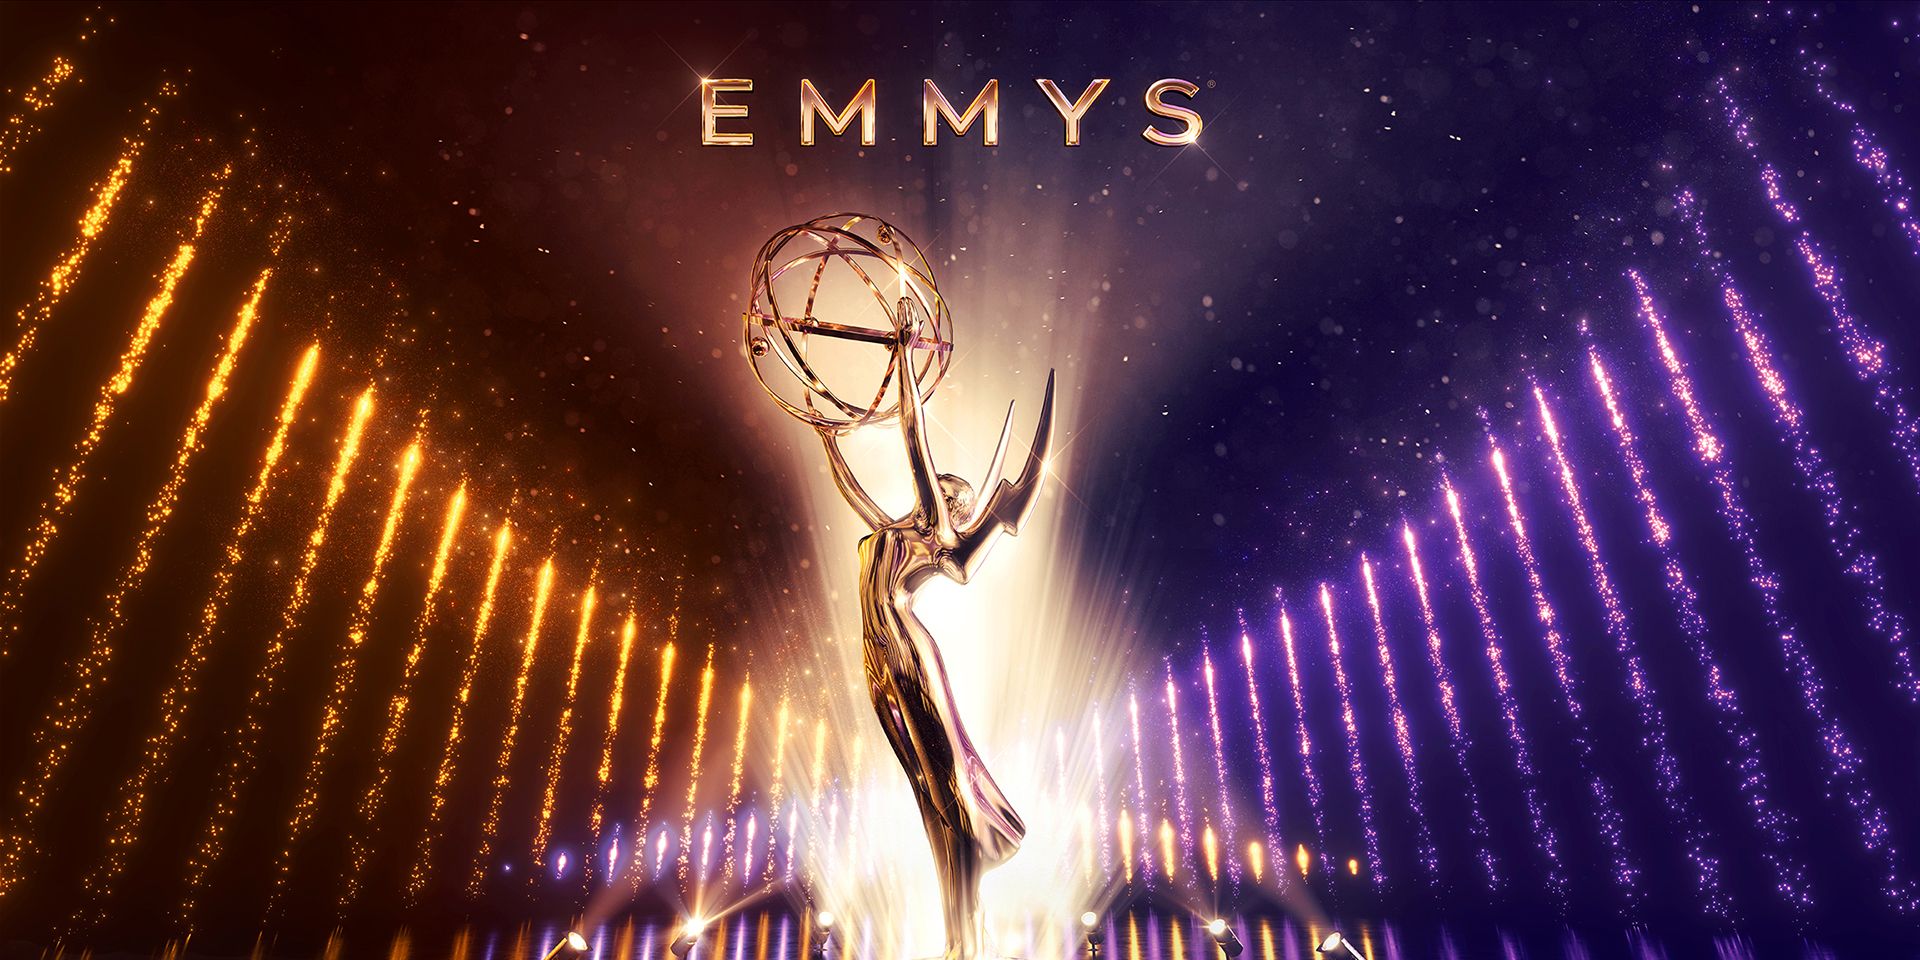 2019 Primetime Emmy Award Nominations True Detective Chernobyl & More